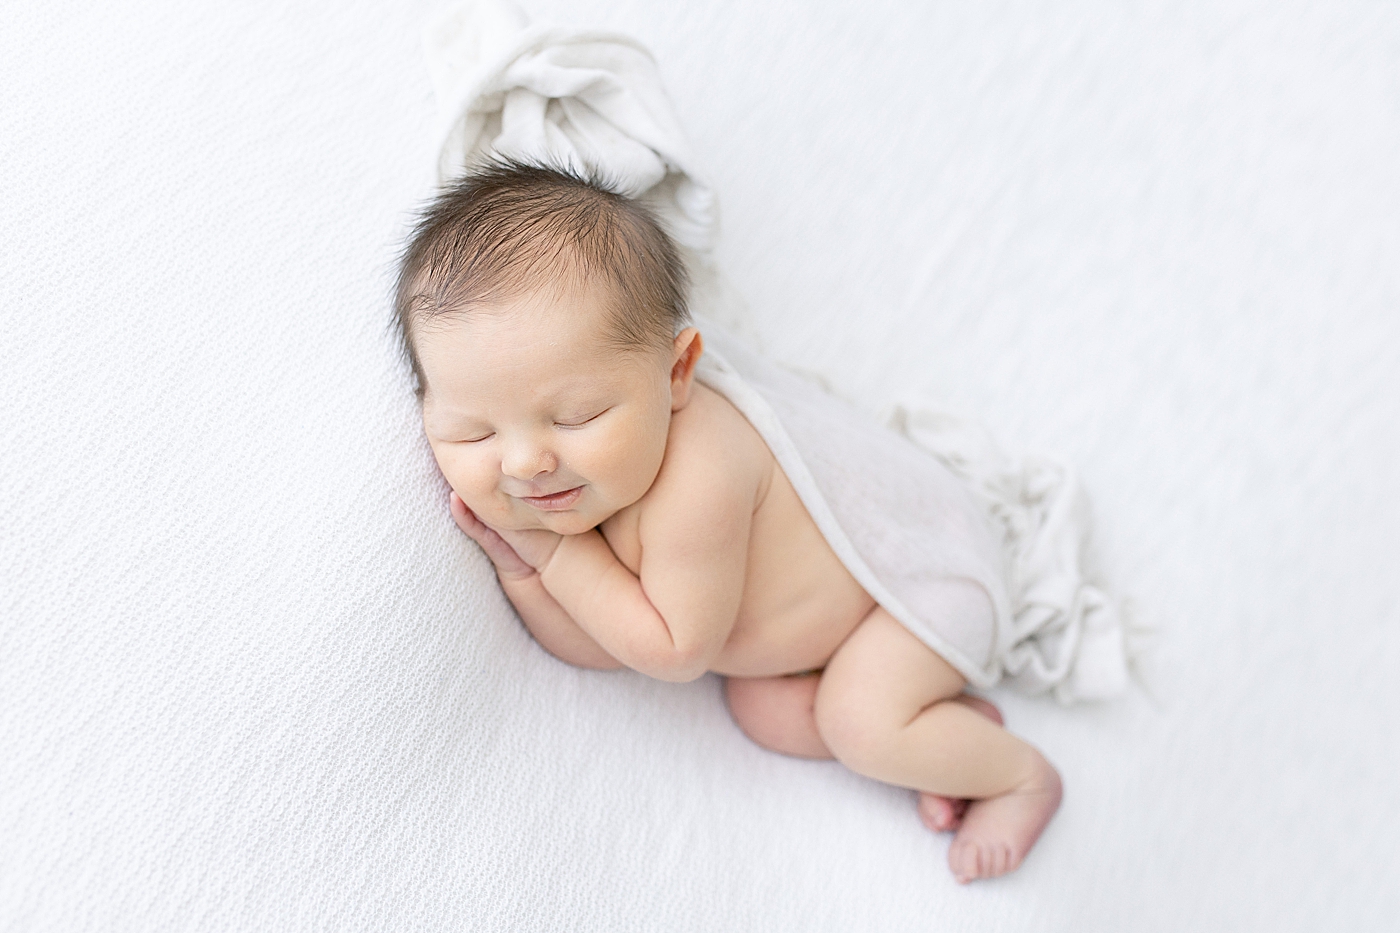 Newborn baby smiling during photos with Pascagoula Newborn Photographer, Little Sunshine Photography.